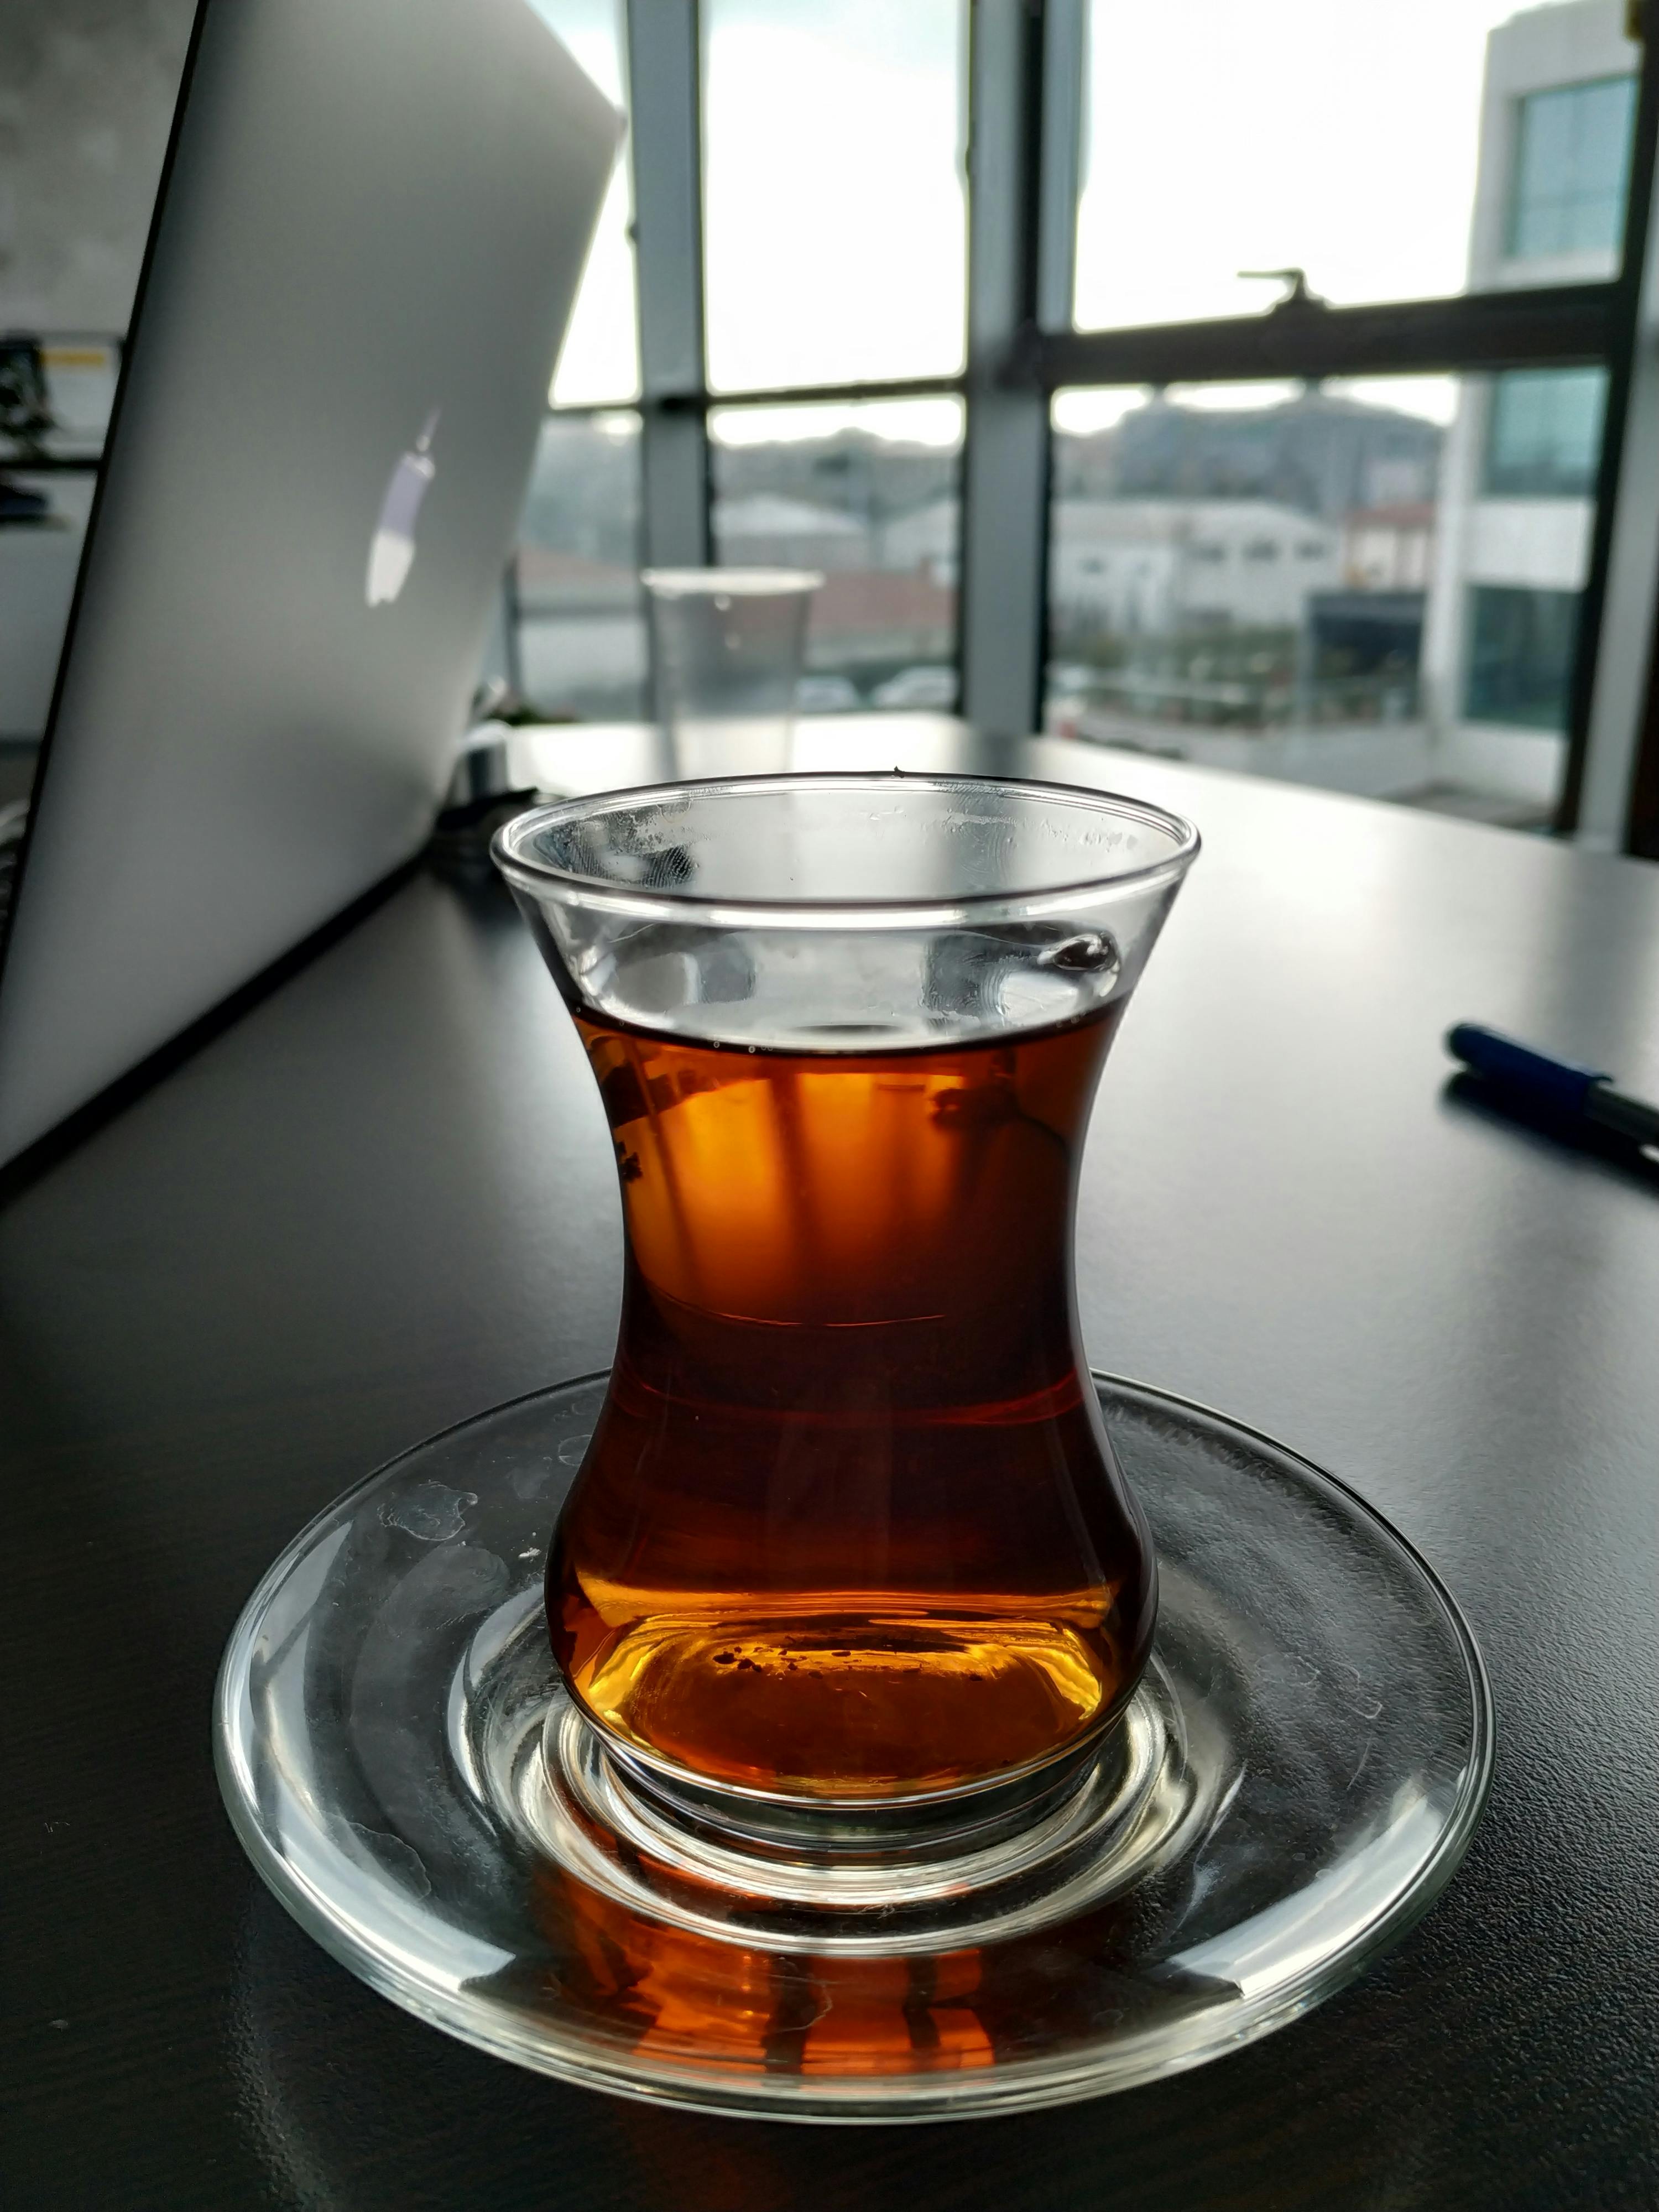 Free stock photo of black tea, computer, office